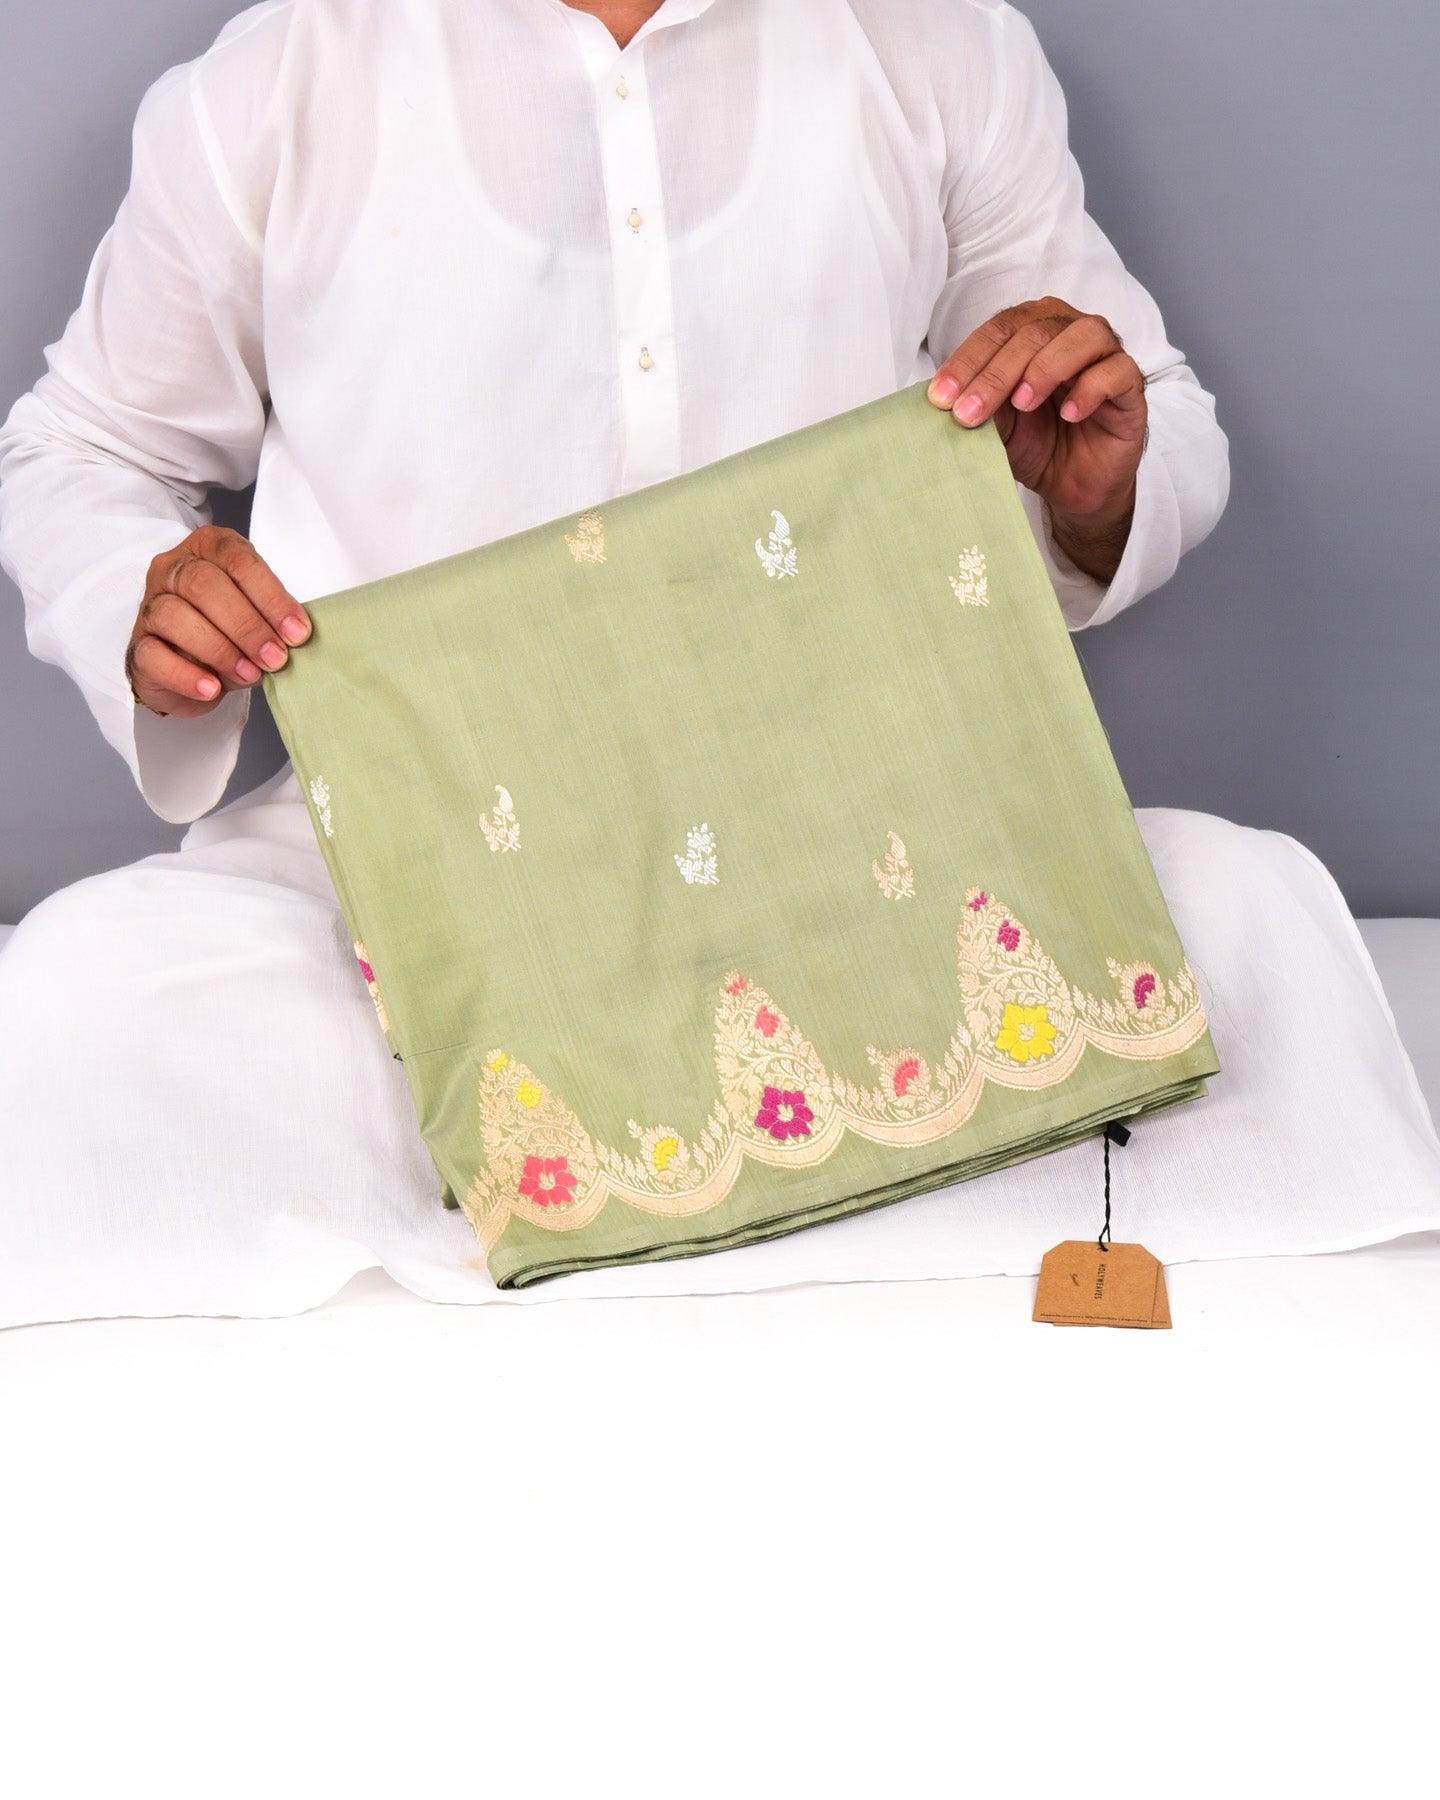 Laurel Green Banarasi Sona-Rupa Buti Kadhuan Brocade Handwoven Katan Silk Saree with Scallop Border - By HolyWeaves, Benares